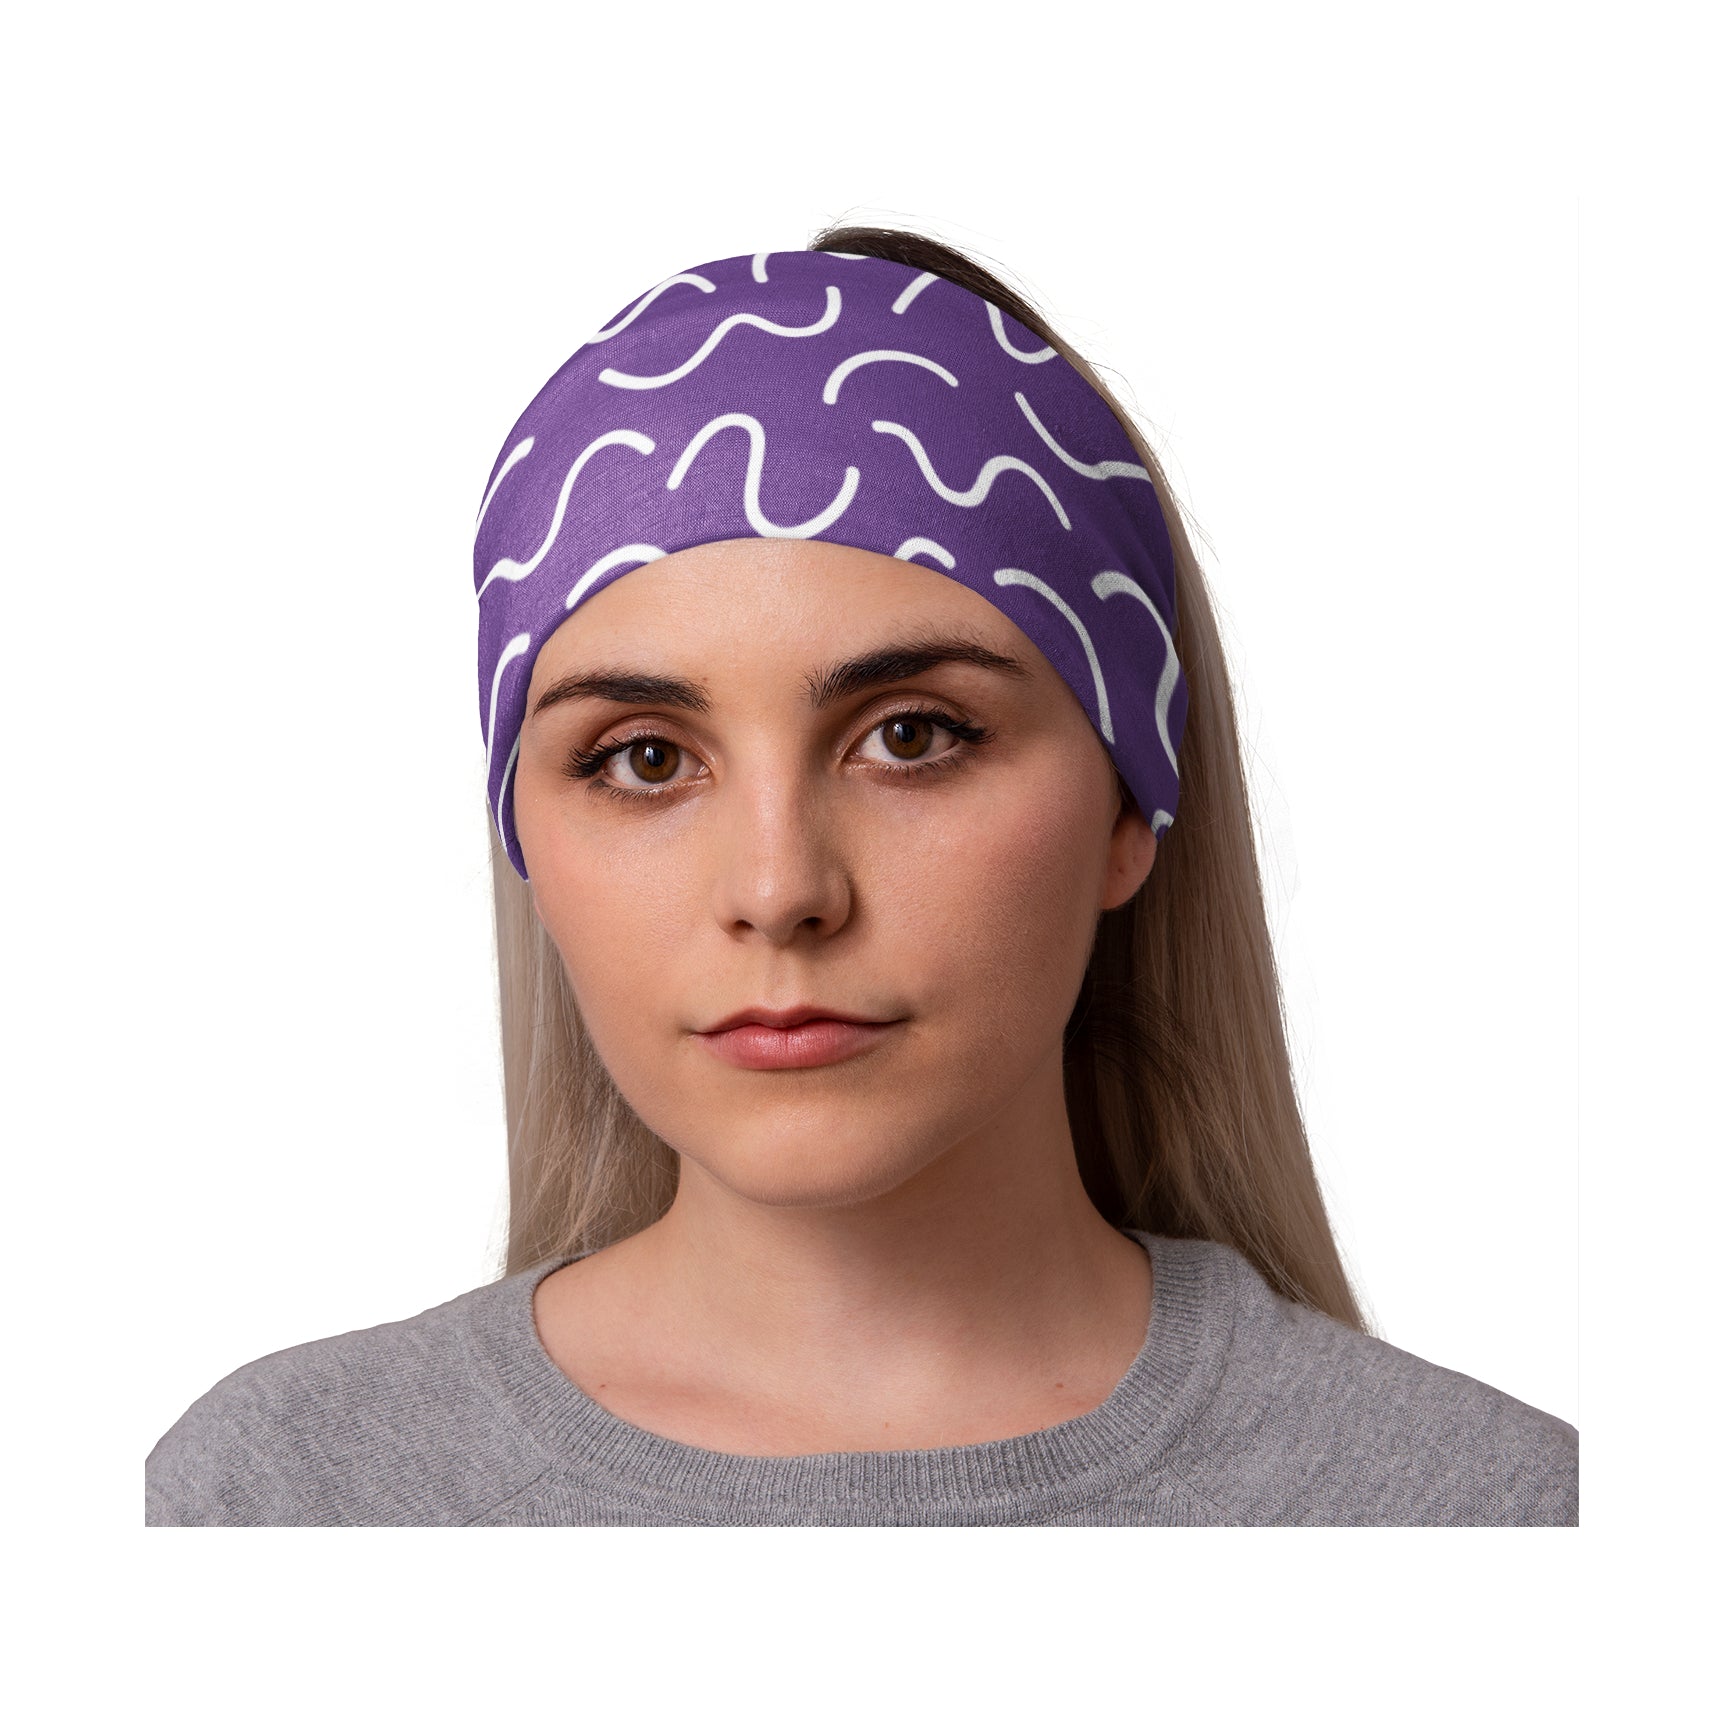 Lunabands Womans Ladies Core Designer Multi Use Multifunctional Running Fitness Workout Gym Bandana Headband Headbands